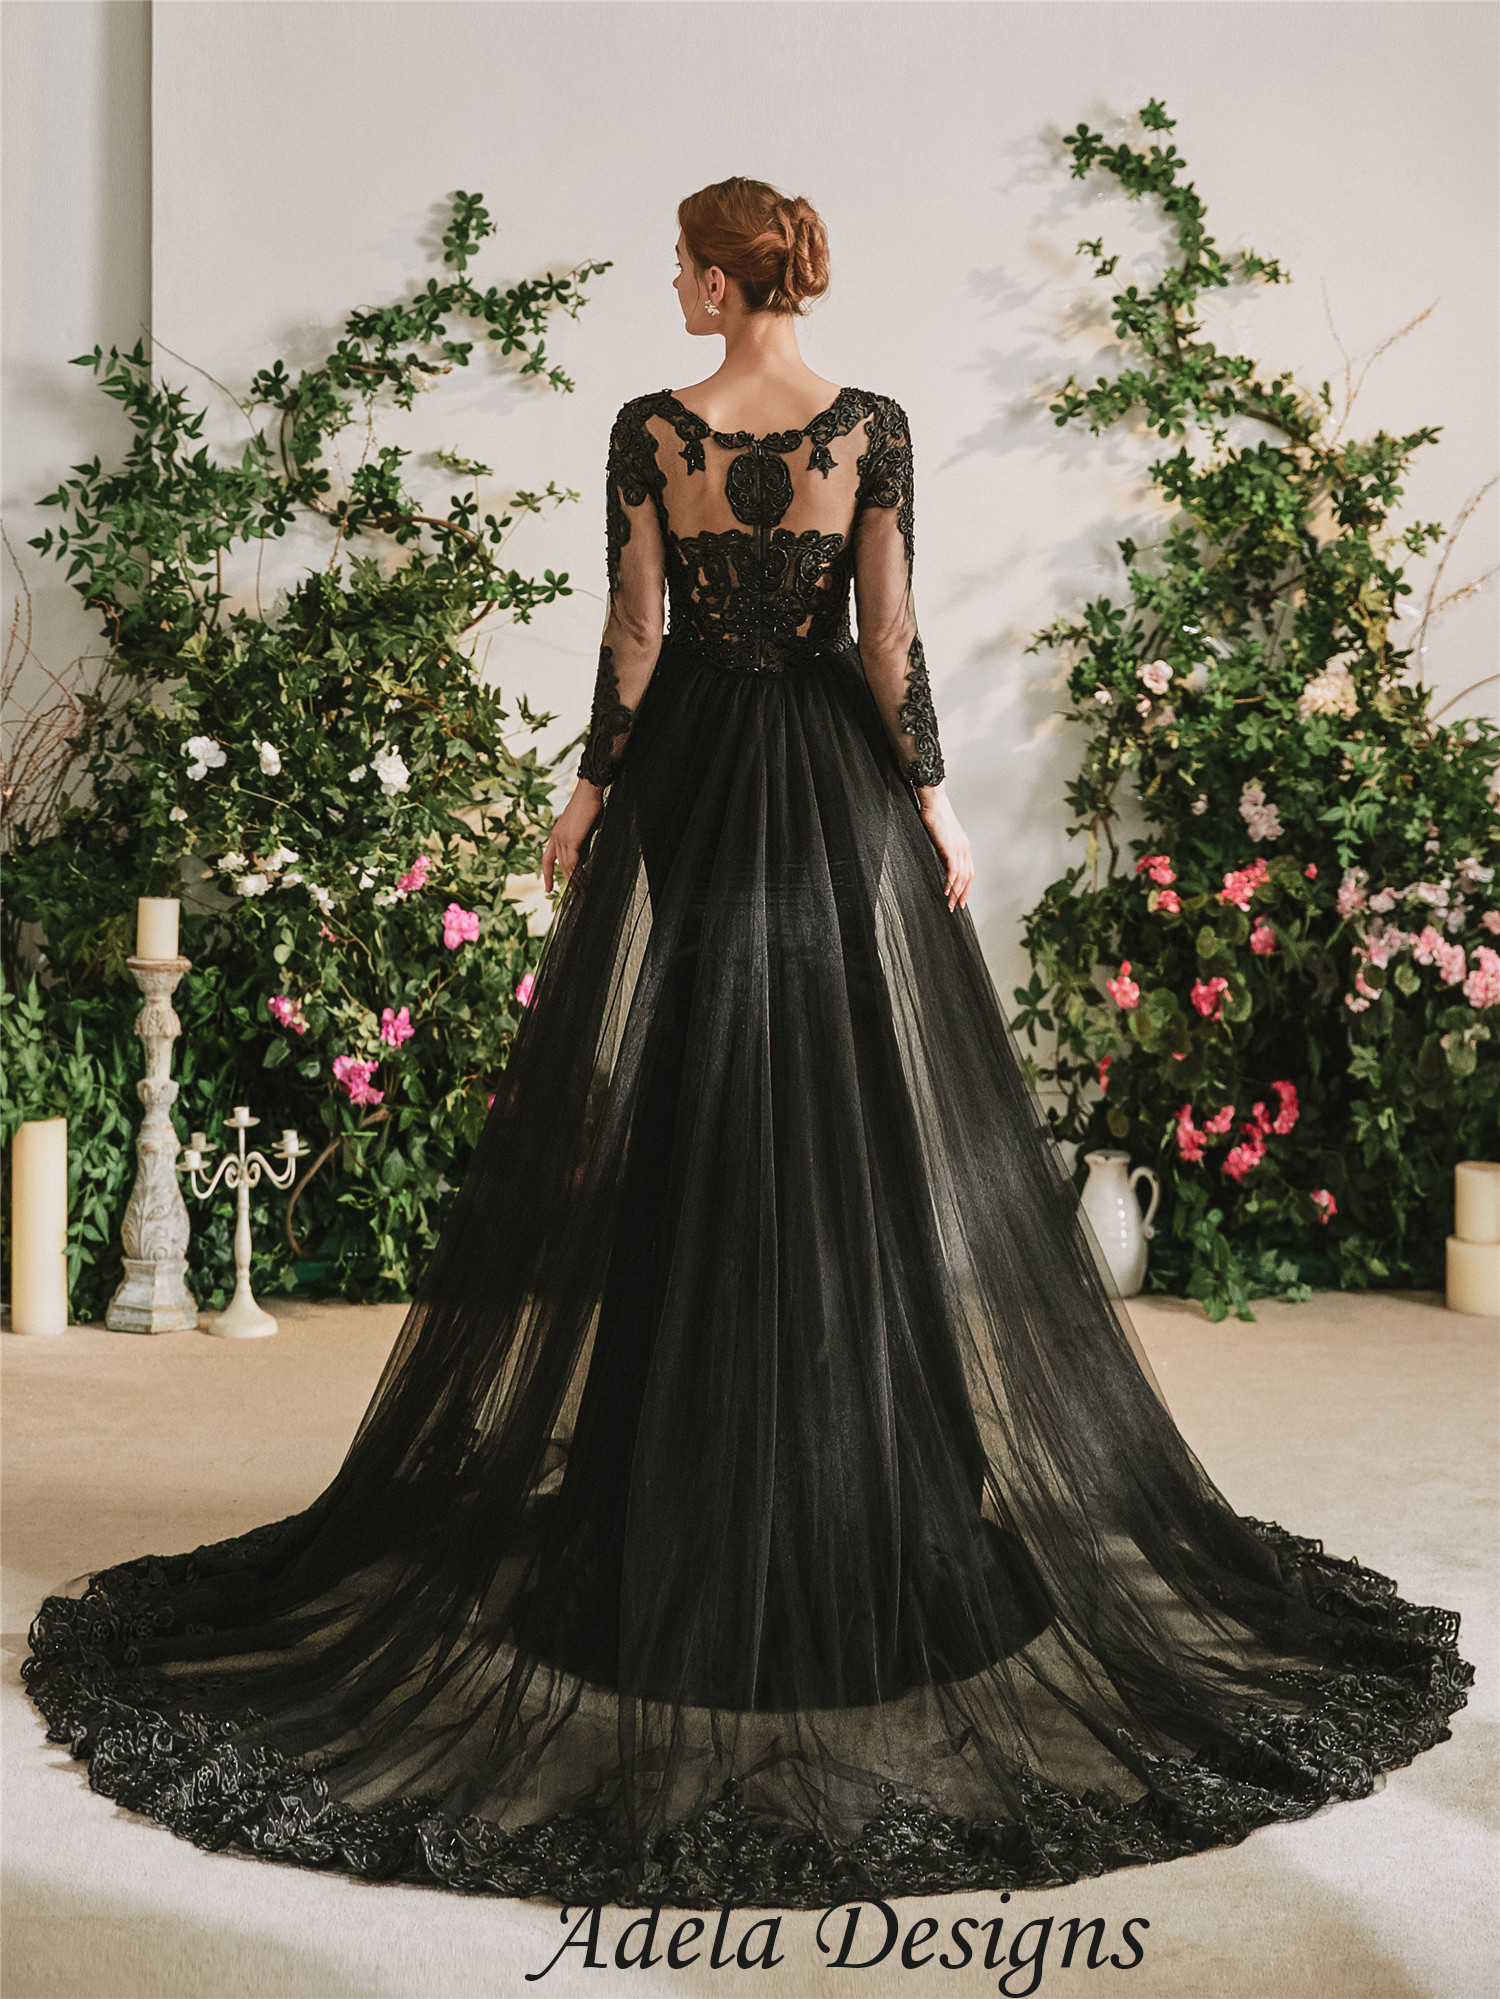 Black Mermaid Gothic Wedding Dress With Detachable Train – Adela Designs